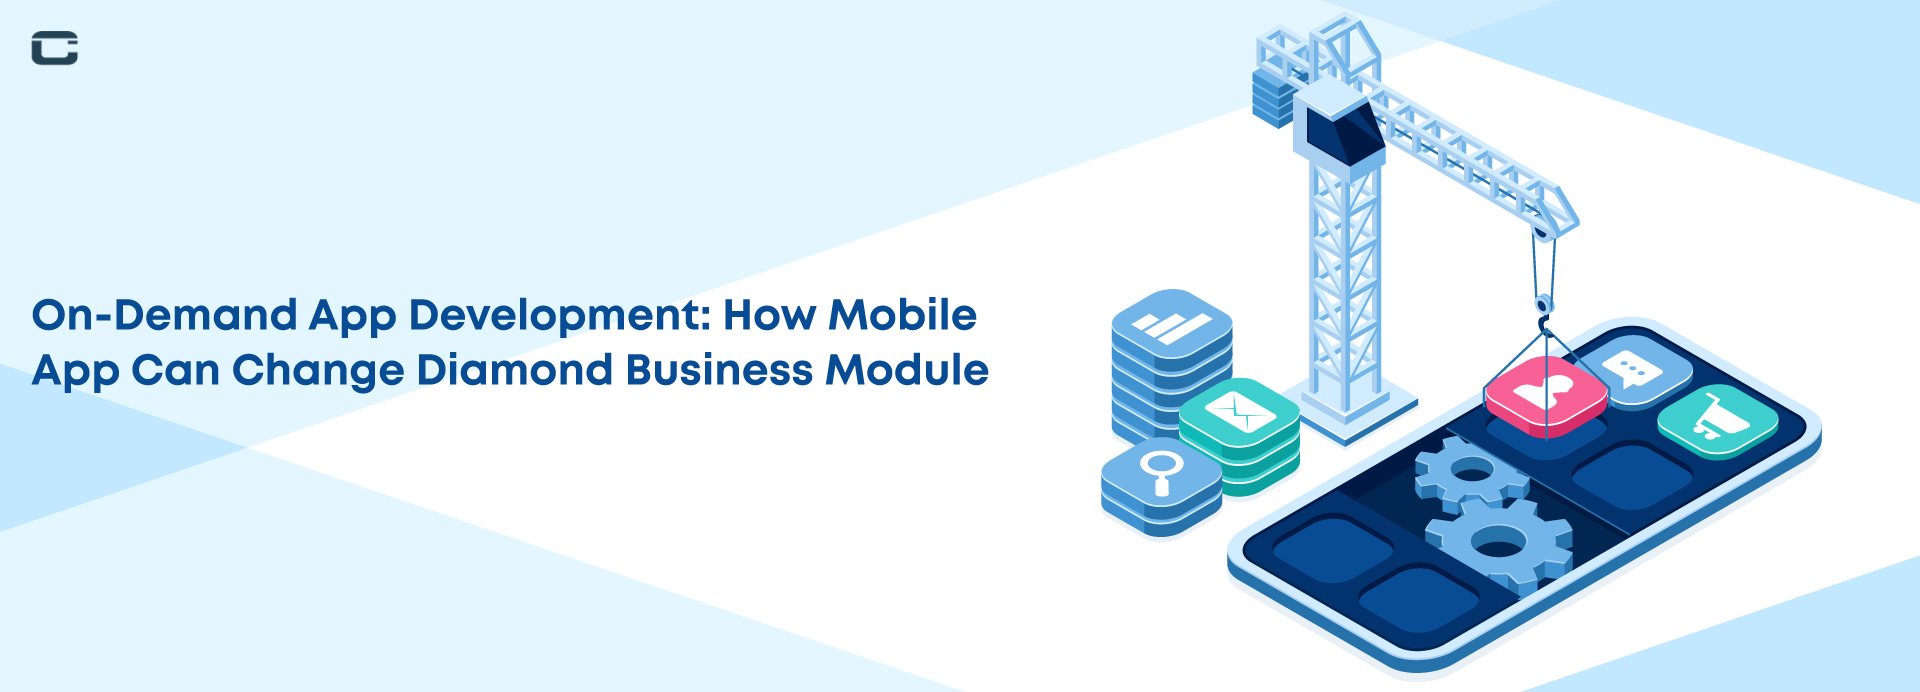 On-Demand App Development: How Mobile App can Change Diamond Business Module